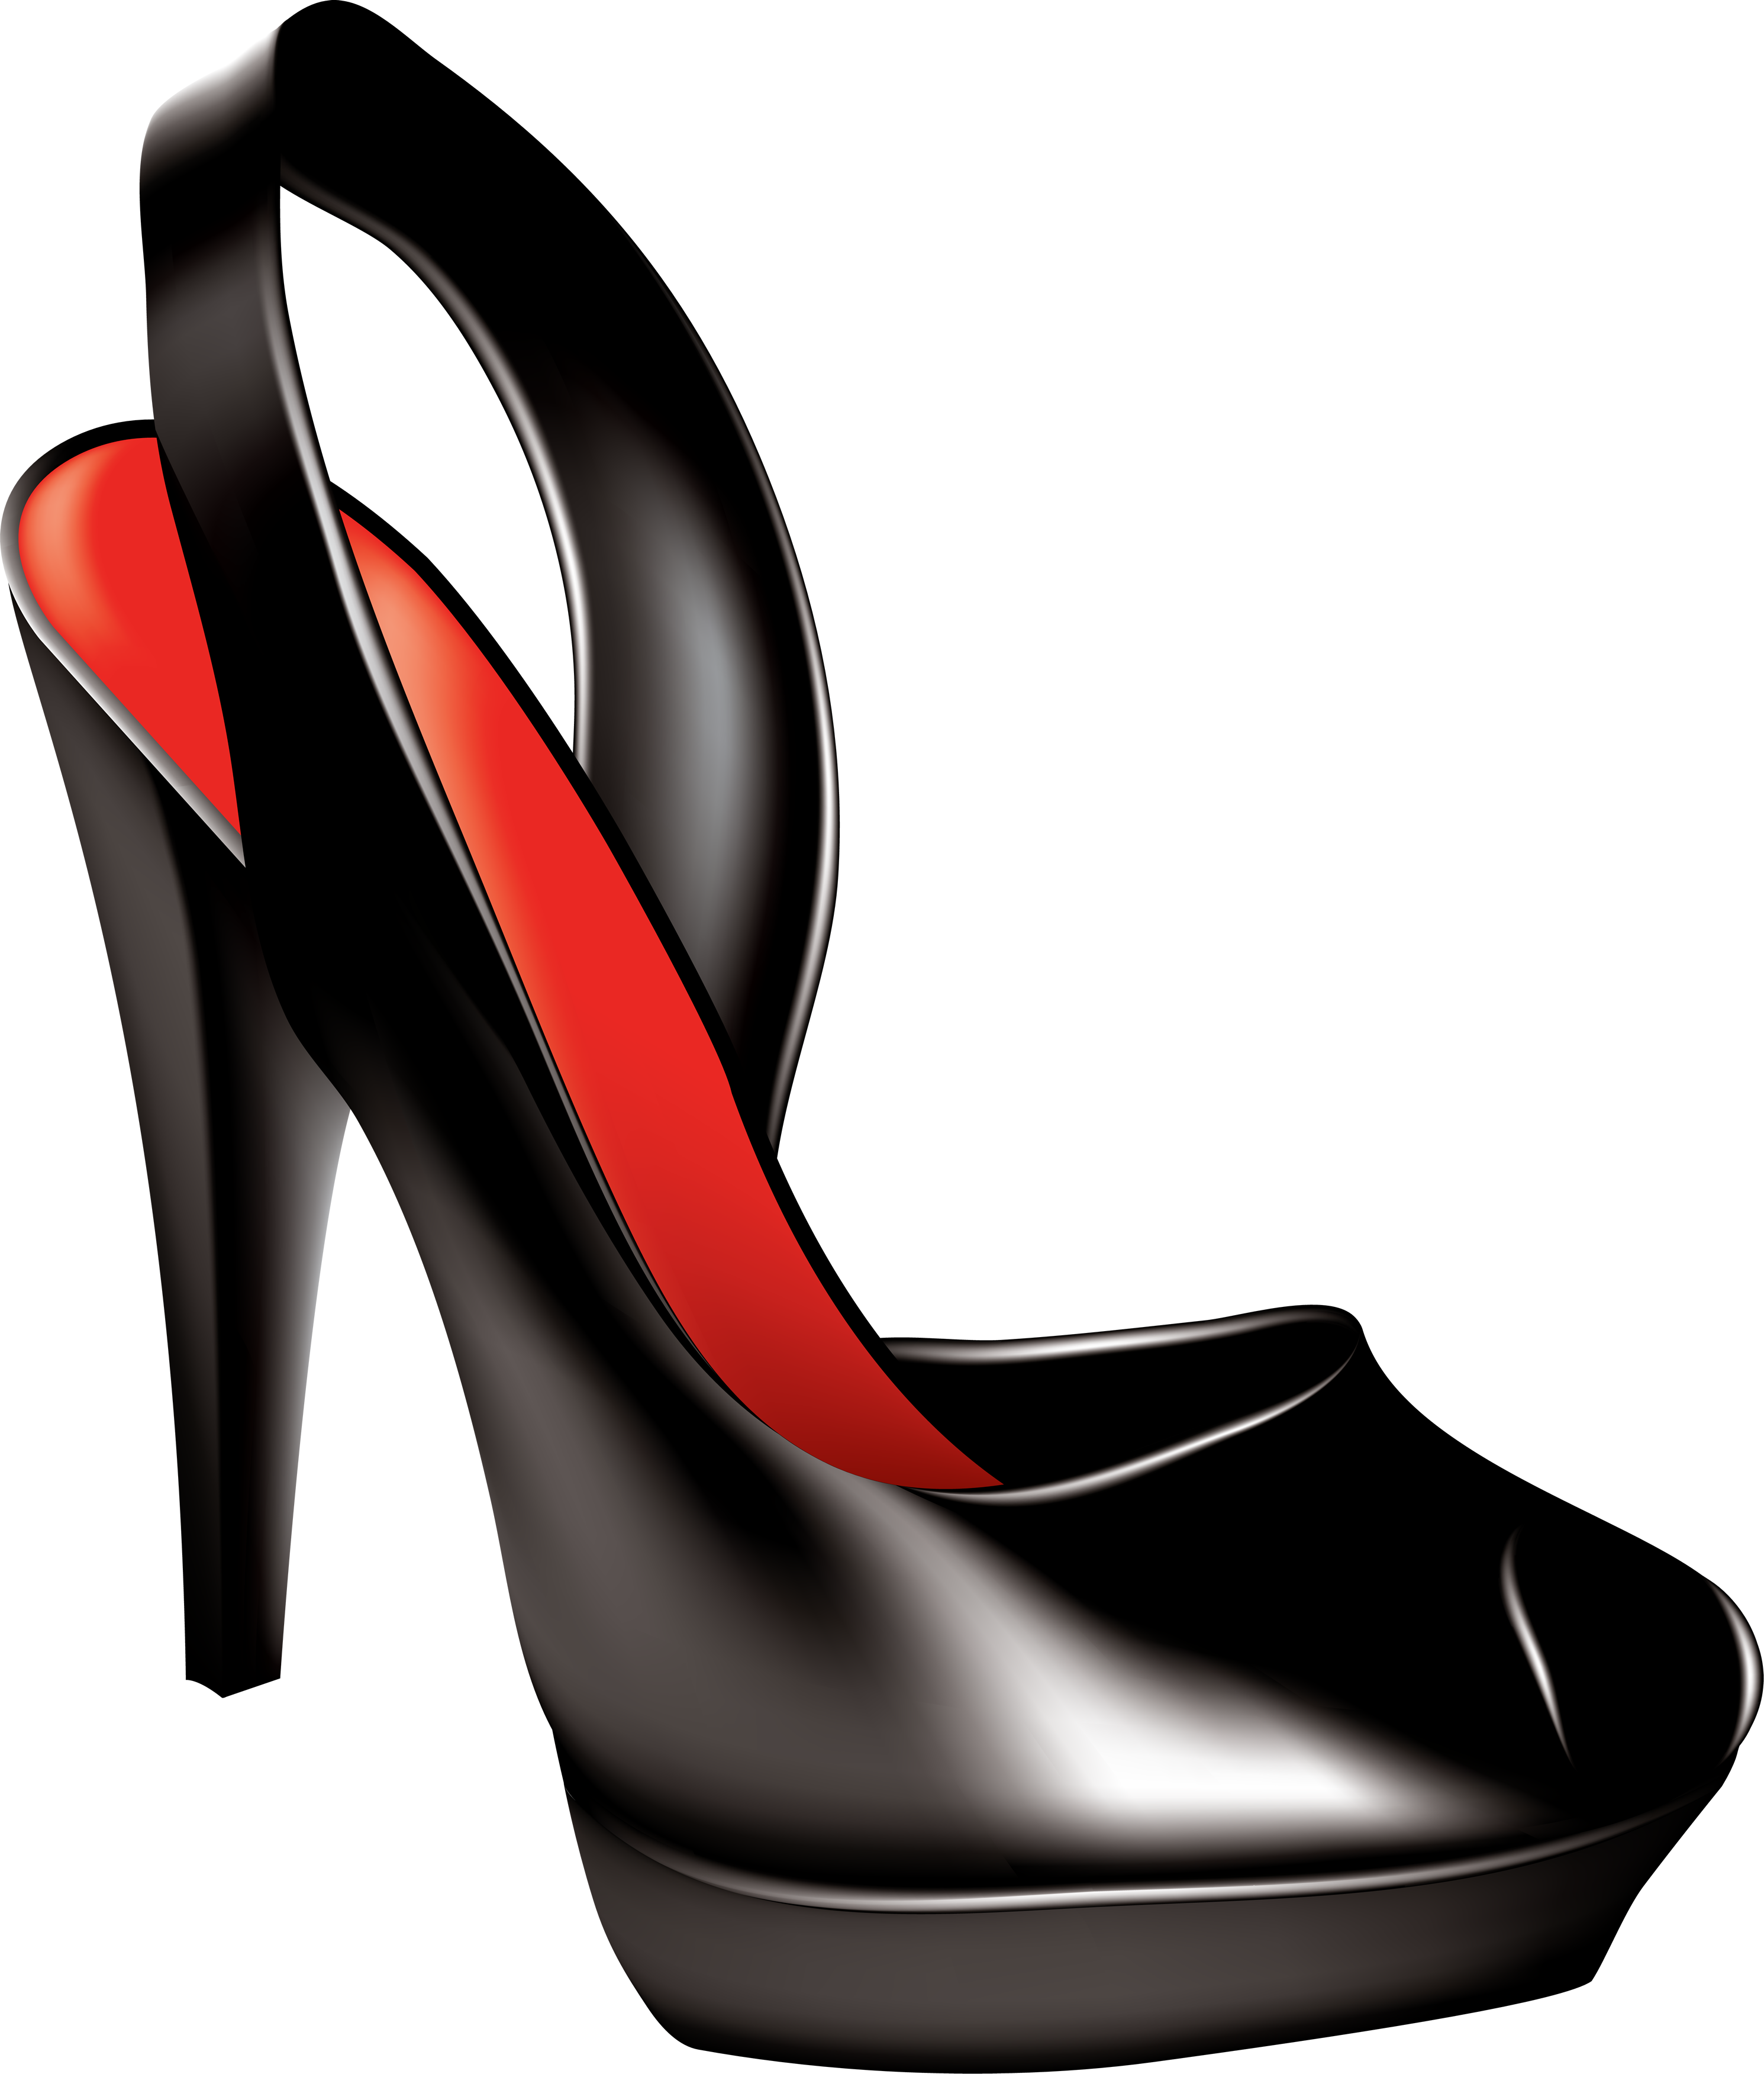 Women Shoes Png Image - Women Shoes, Transparent background PNG HD thumbnail